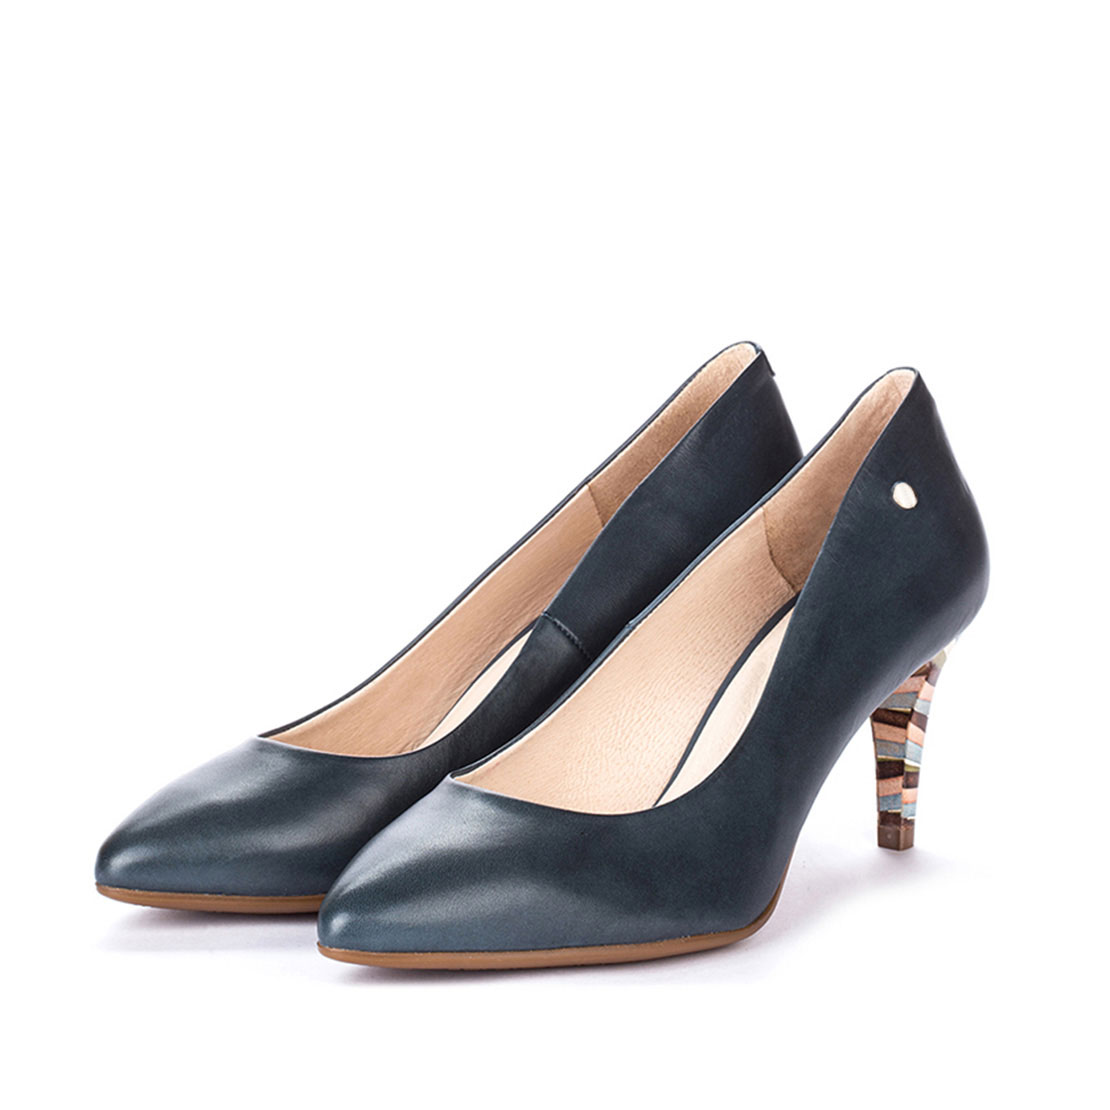 Genuine leather women business pump shoes YB2075 - Pump Shoes ...